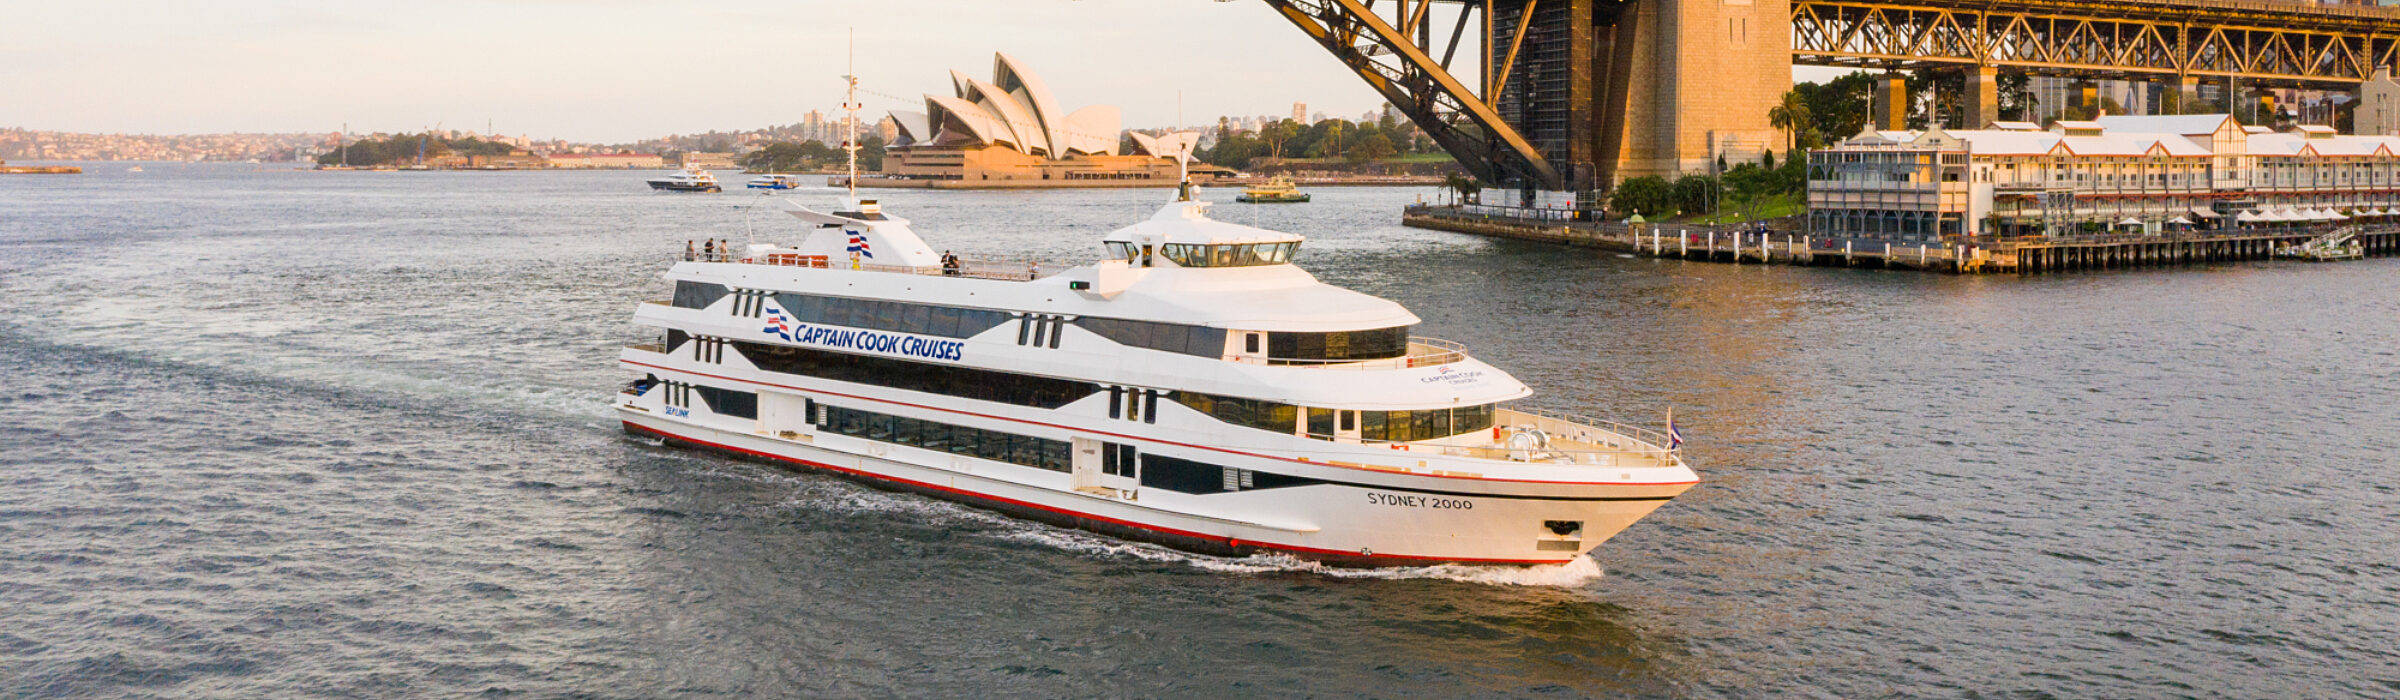 sydney 2000 harbour cruise